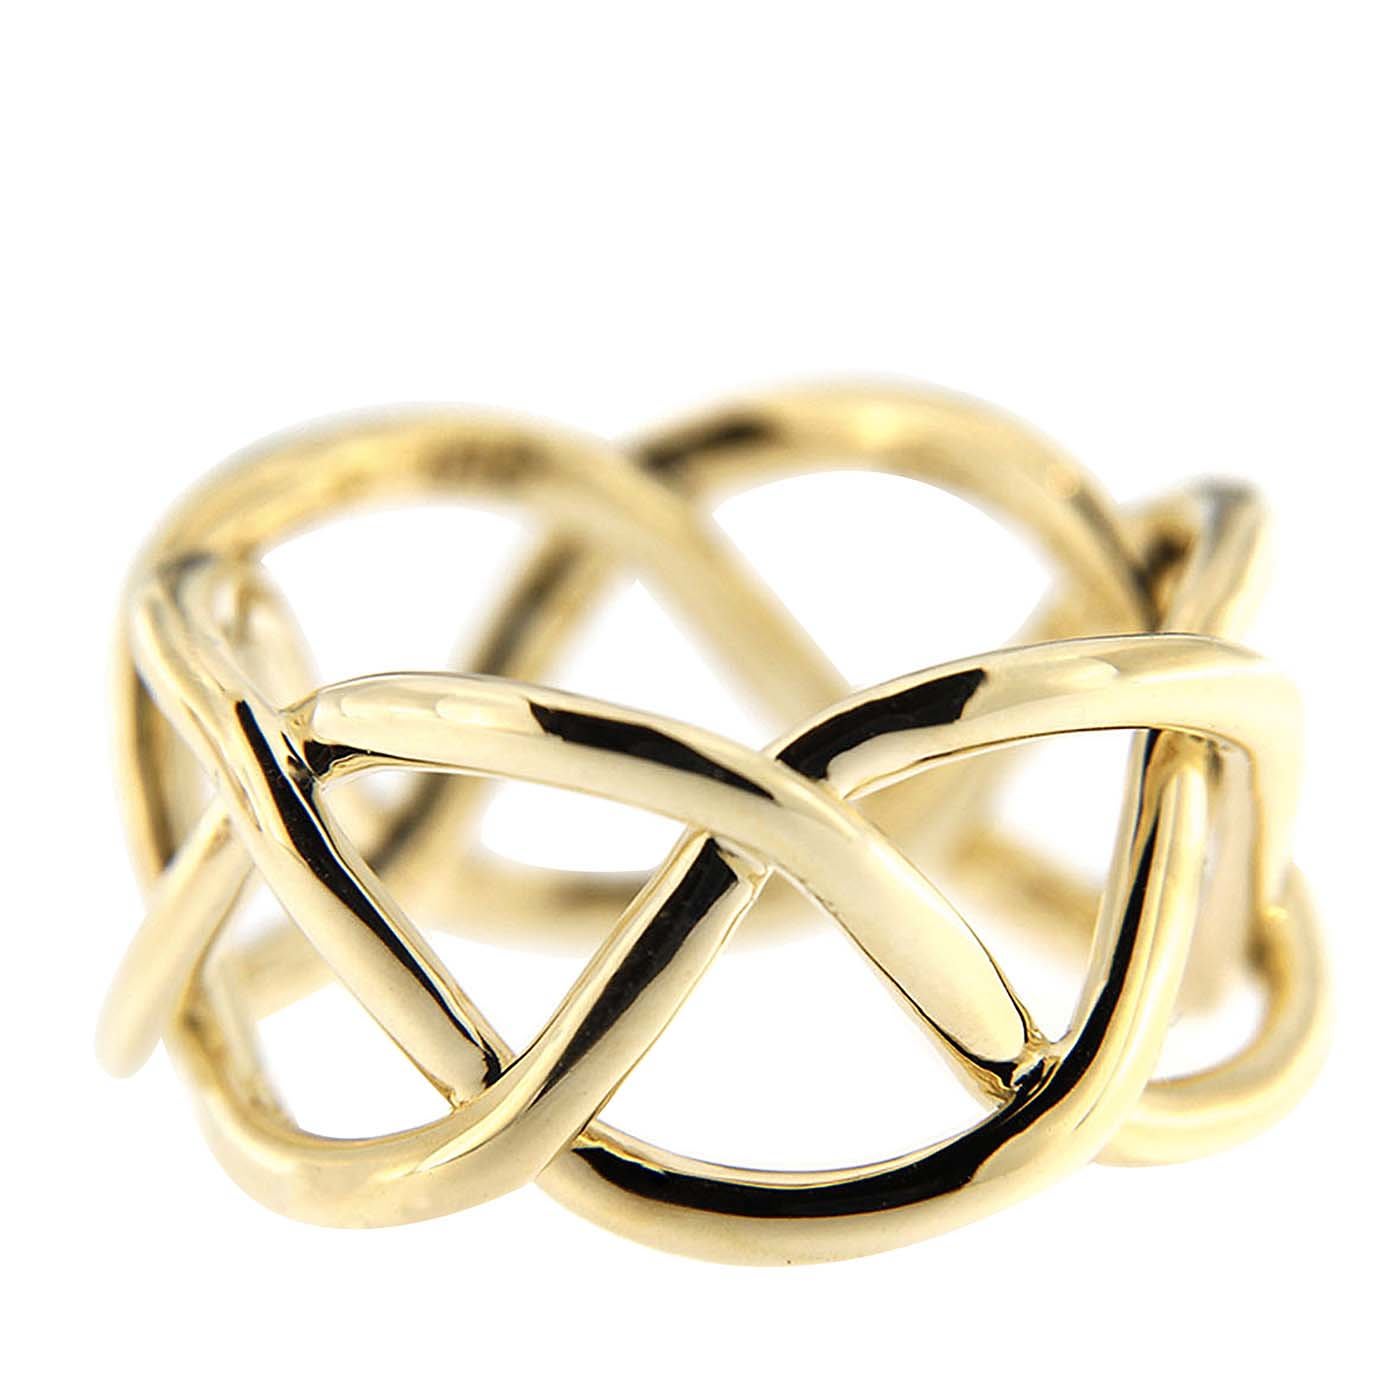 Gold Twisted Eternity Ring - Jona